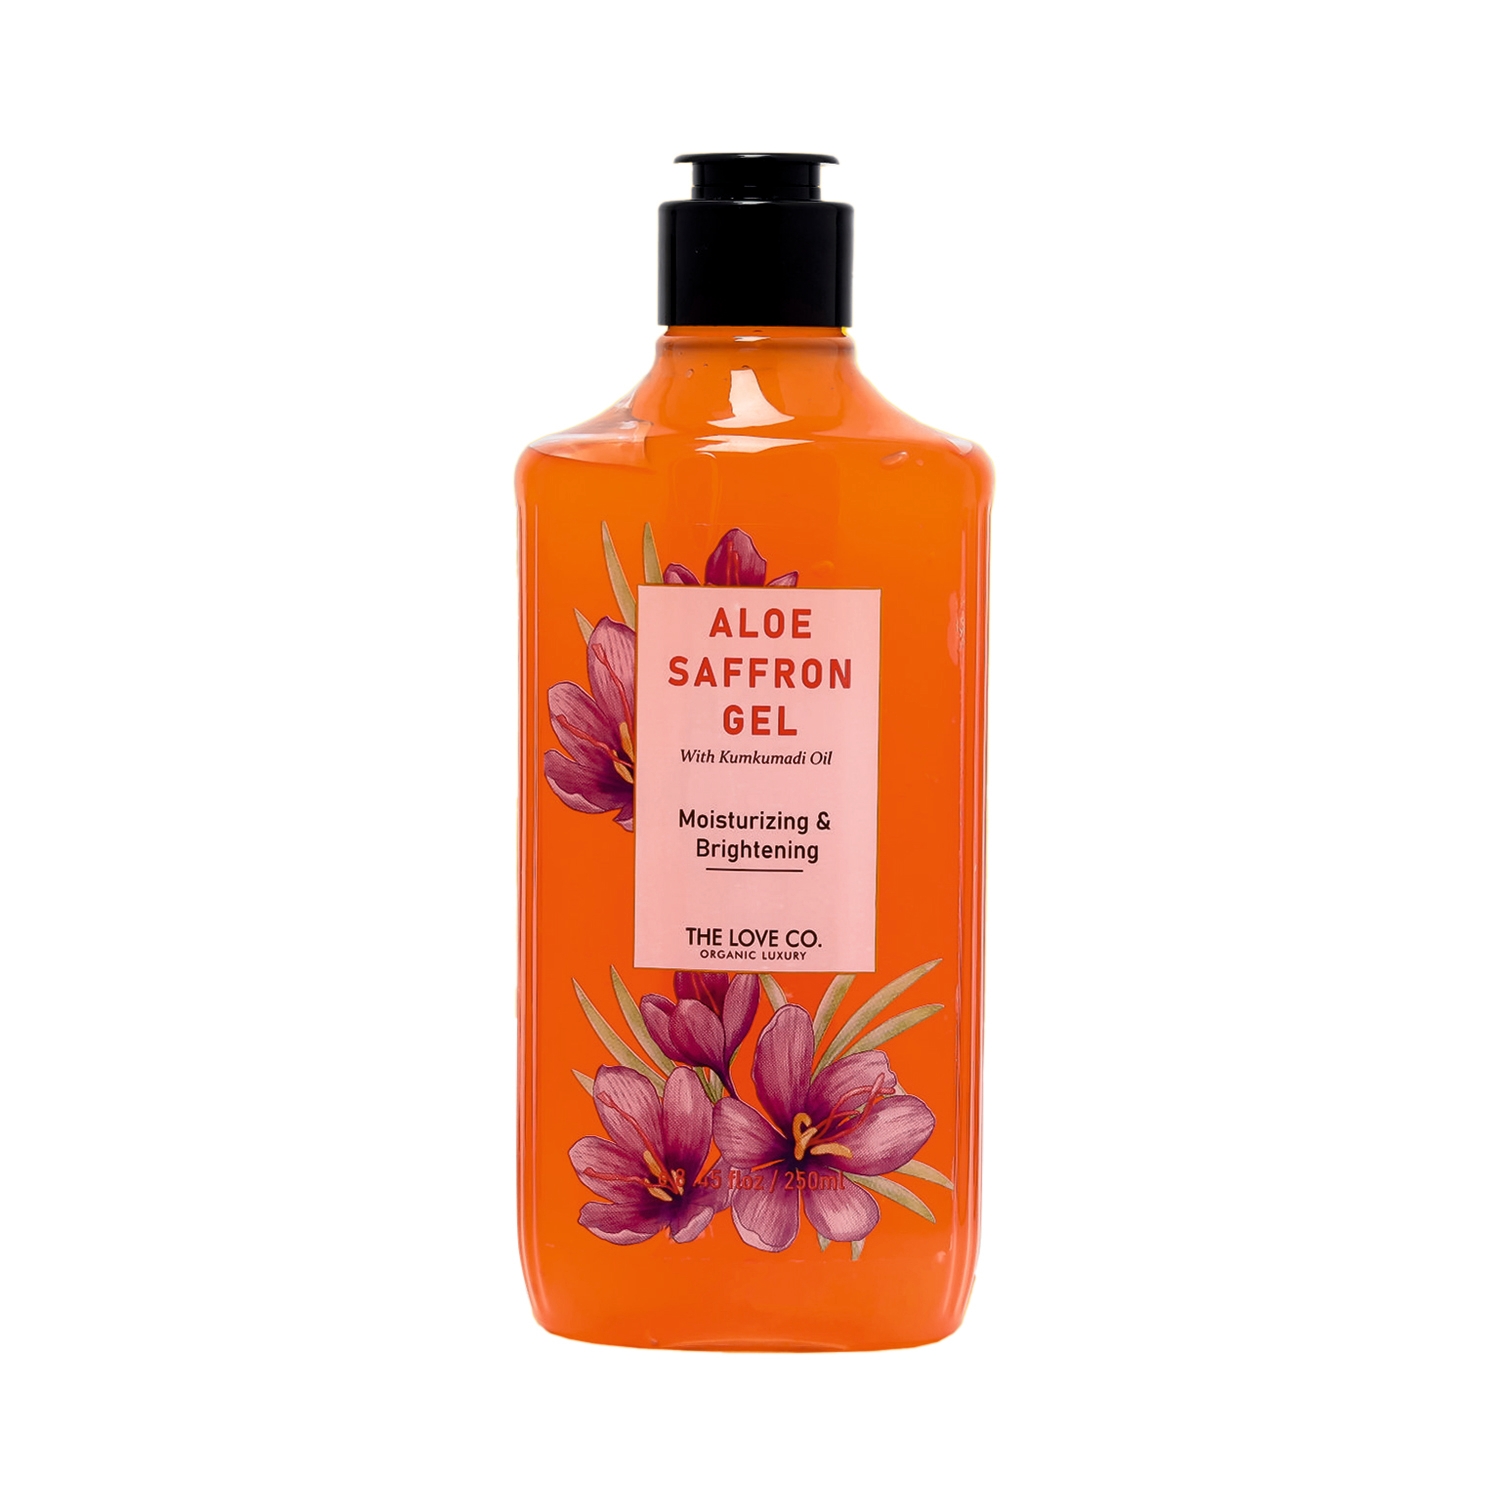 THE LOVE CO. | THE LOVE CO. Aloe Saffron Gel For Moisturizing & Brightening Skin (250ml)